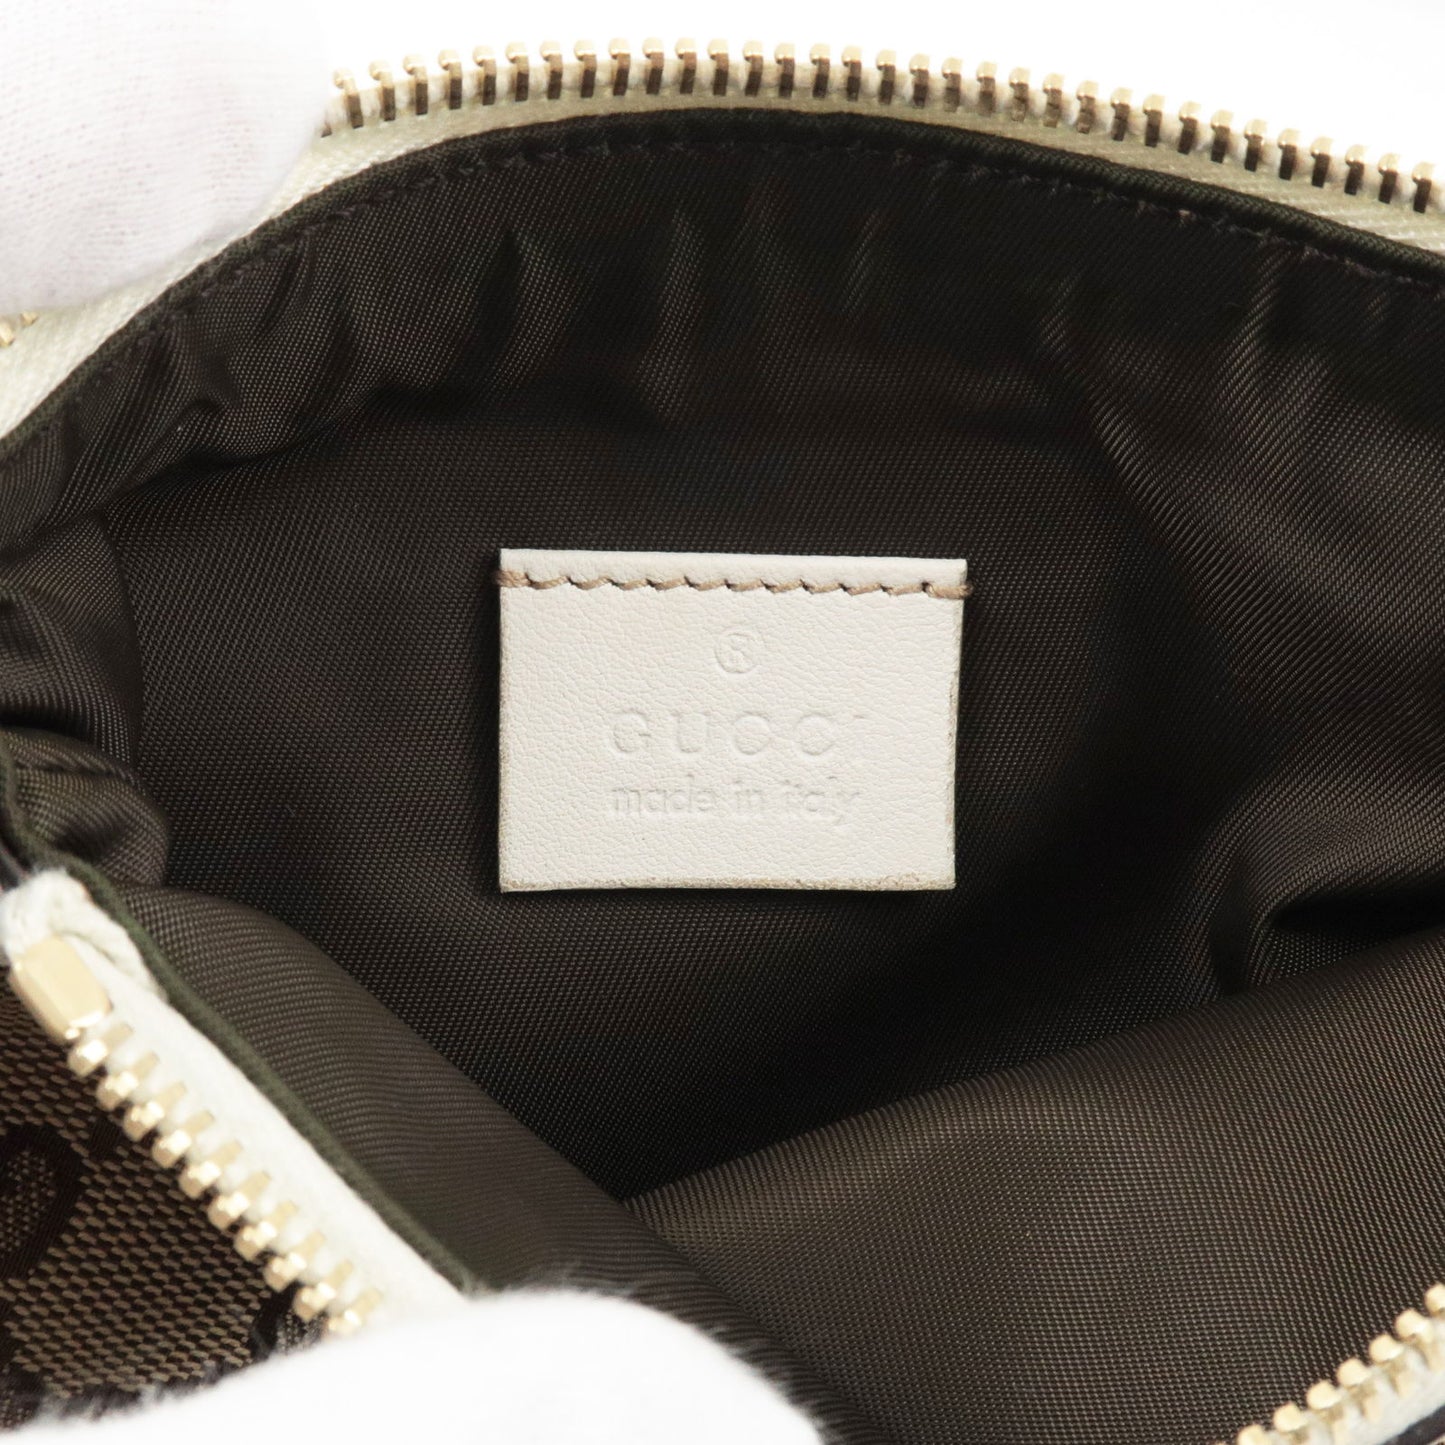 GUCCI Interlocking GG Canvas Leather Shoulder Bag 212216